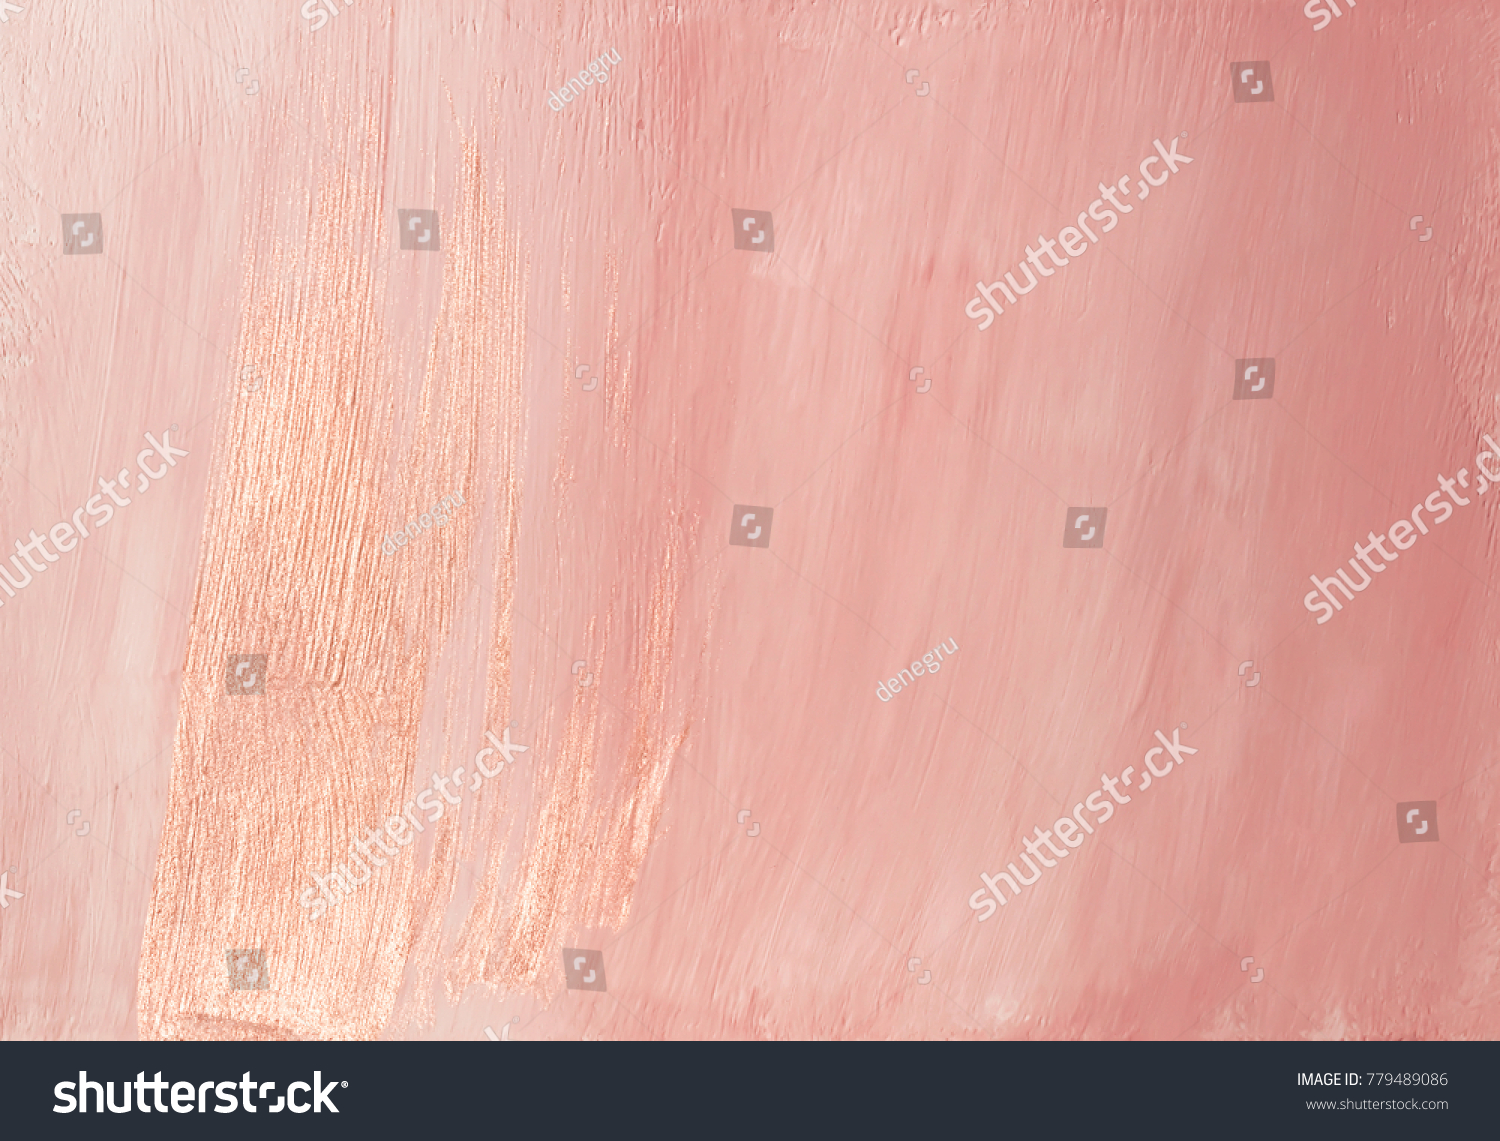 Feminine glamorous dusty pink abstract painted background texture with shiny metallic golden brush streak #779489086